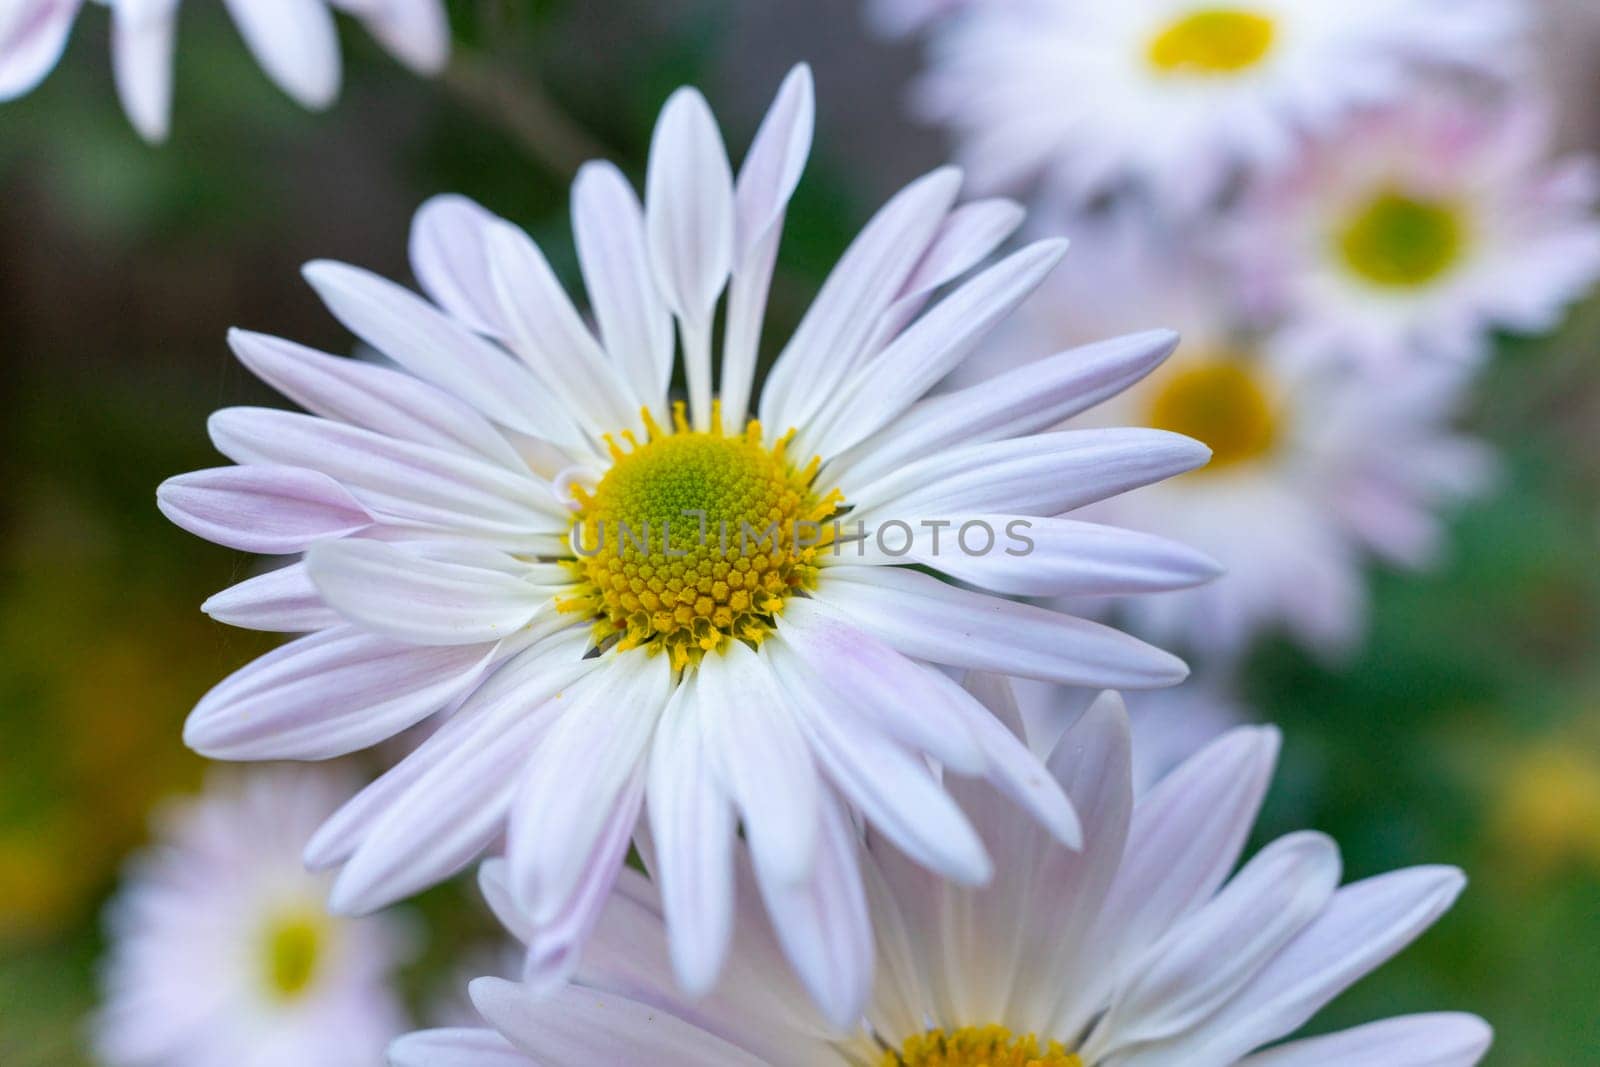 White flower close-up on the background of other flowers. Big white daisy by Serhii_Voroshchuk